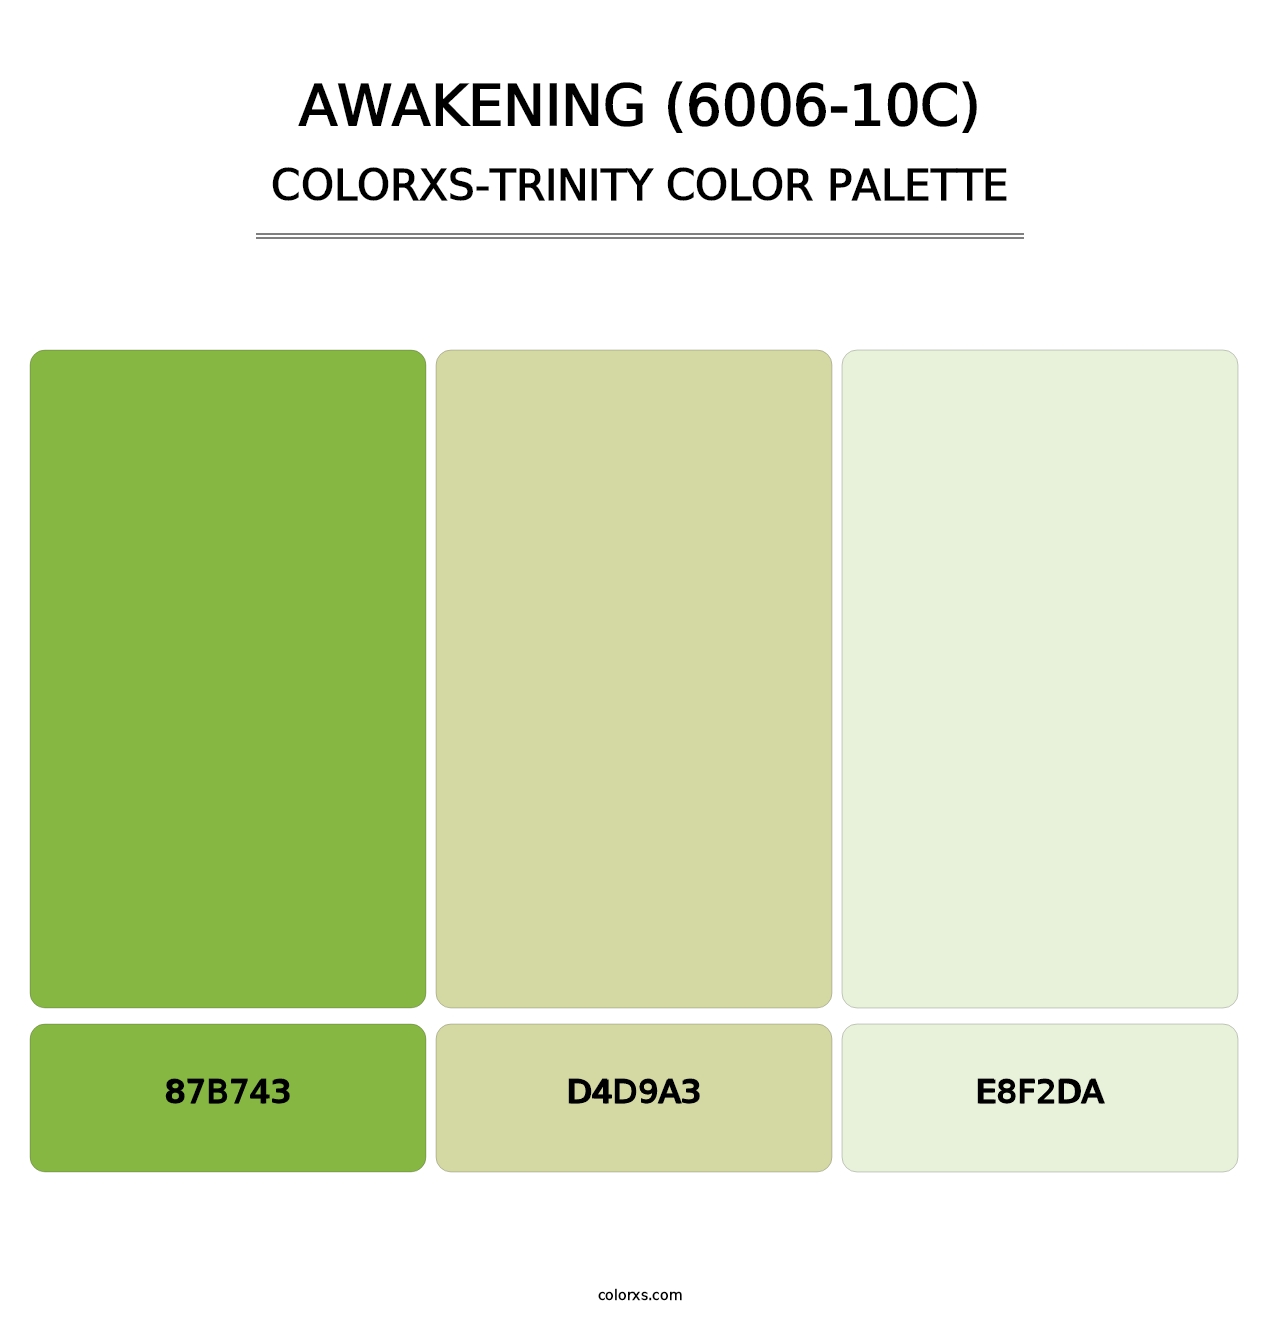 Awakening (6006-10C) - Colorxs Trinity Palette